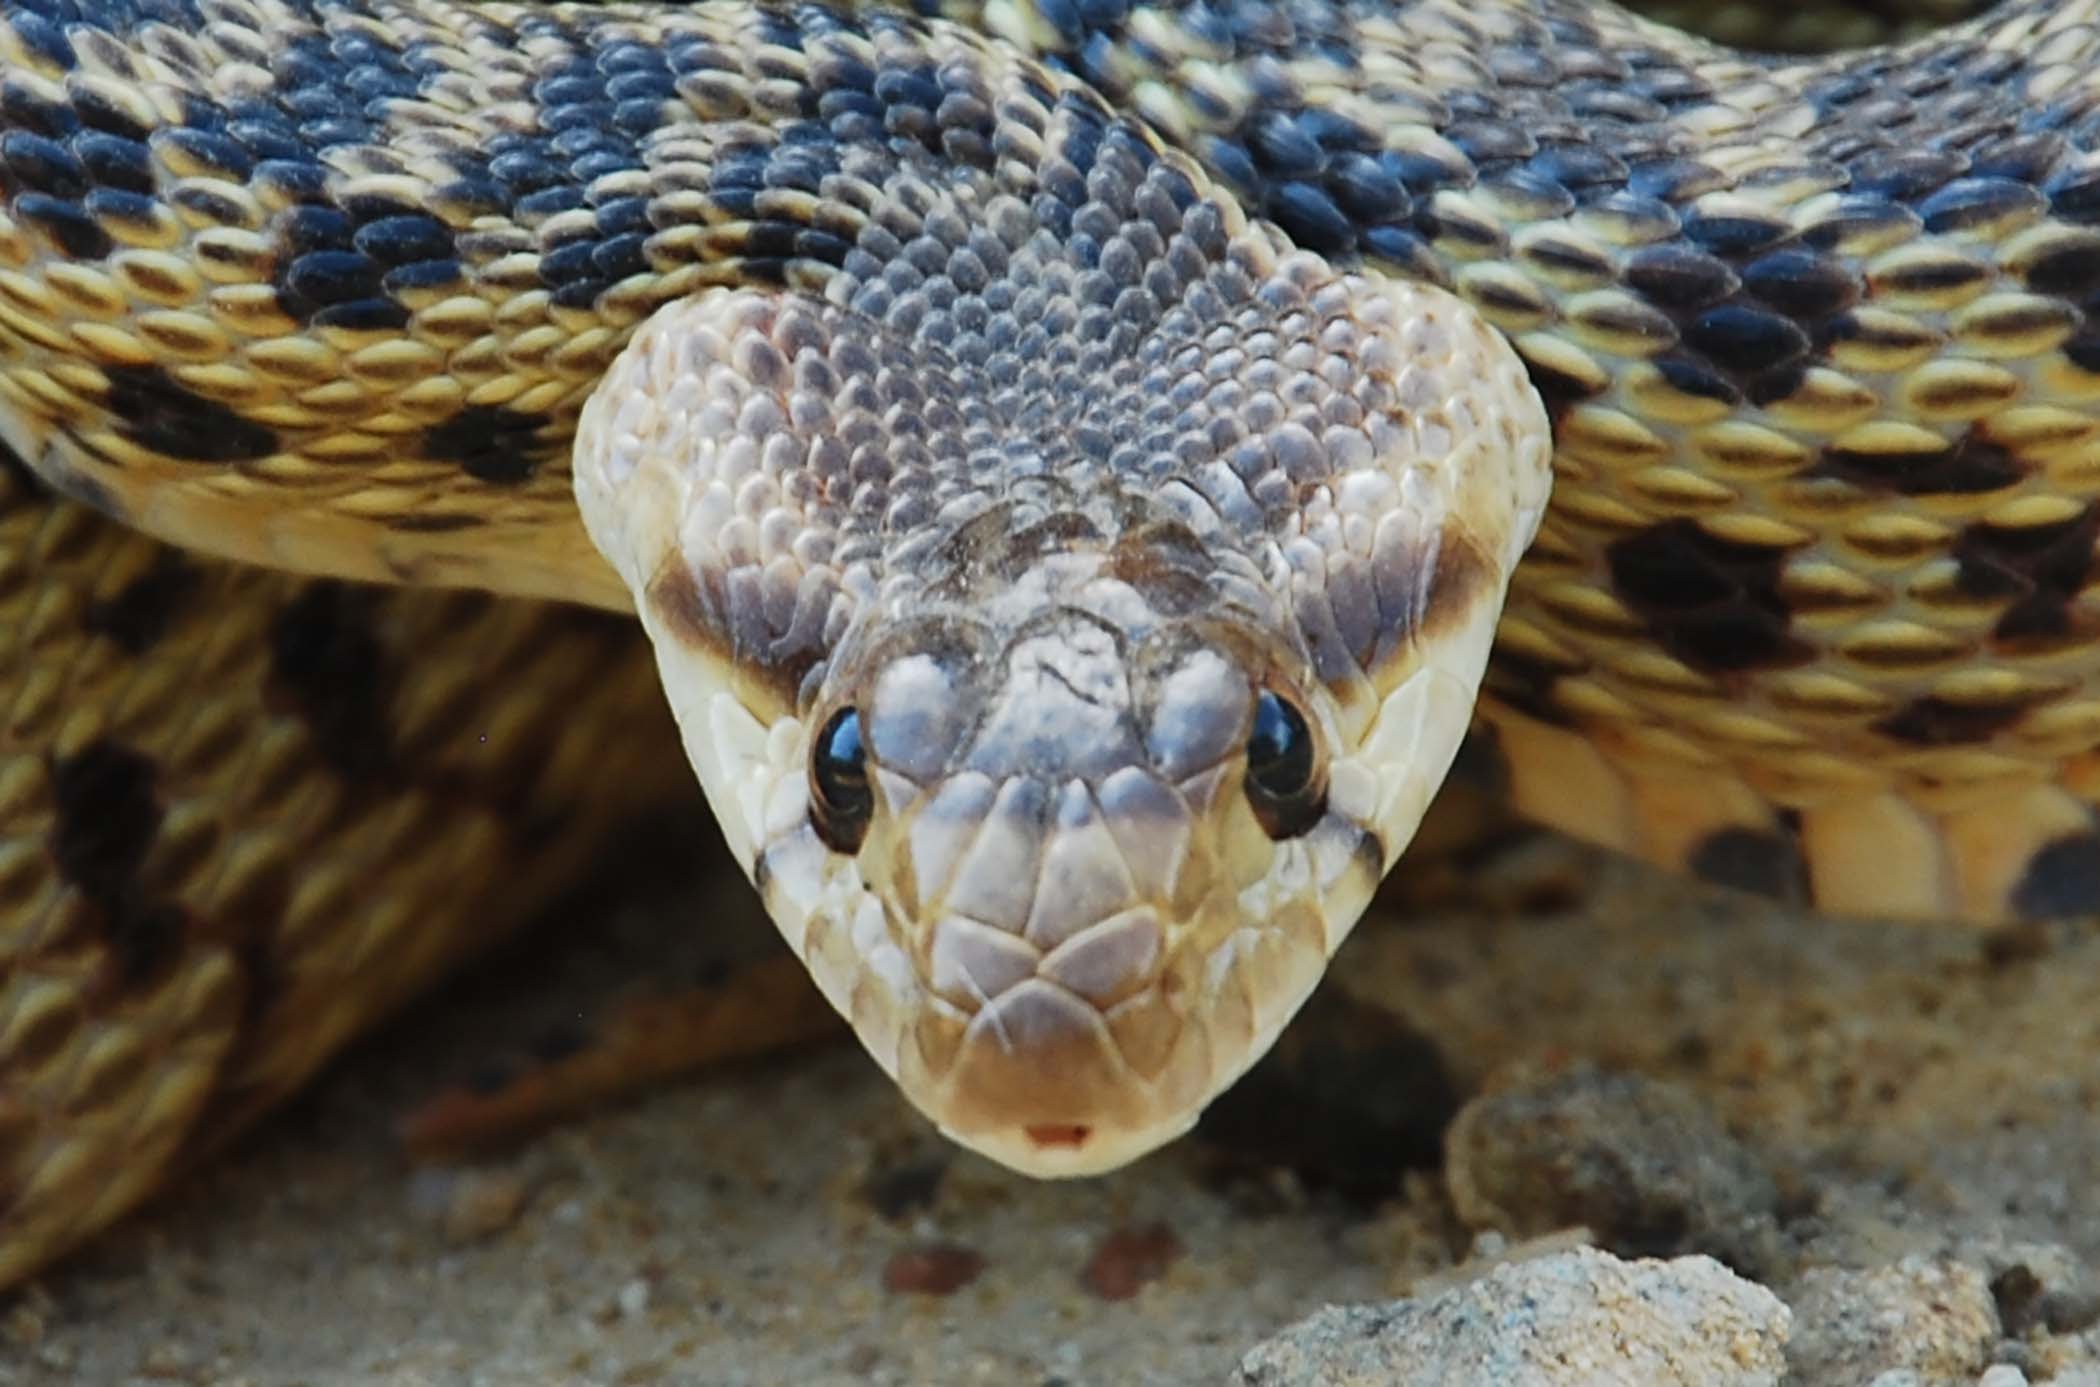 Gopher snake photo